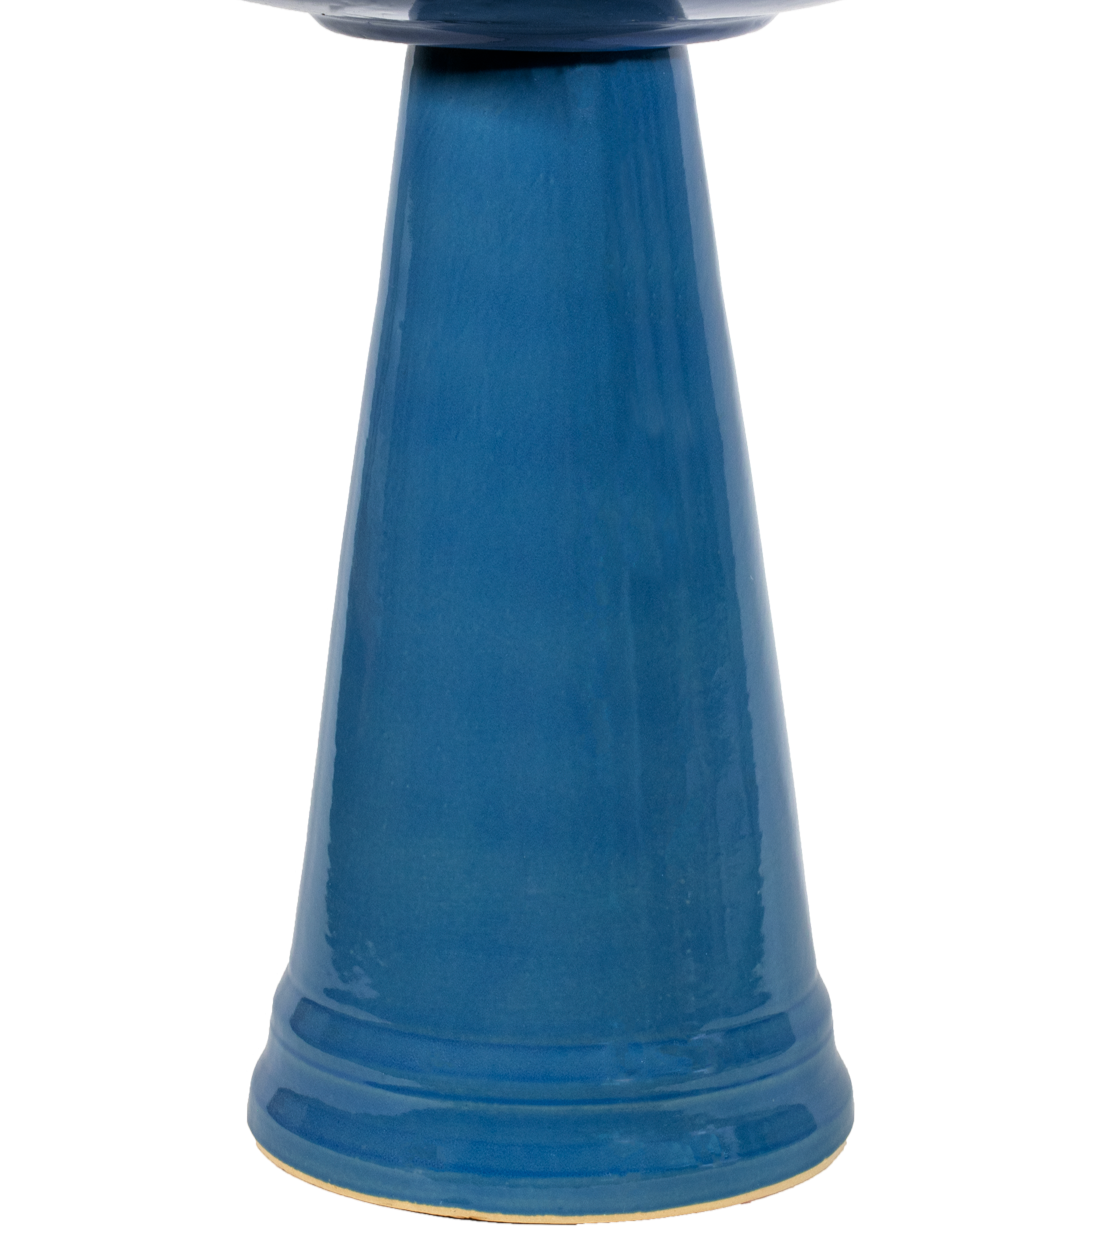 ceramic light blue birdbath pedestal with a simple clean modern design